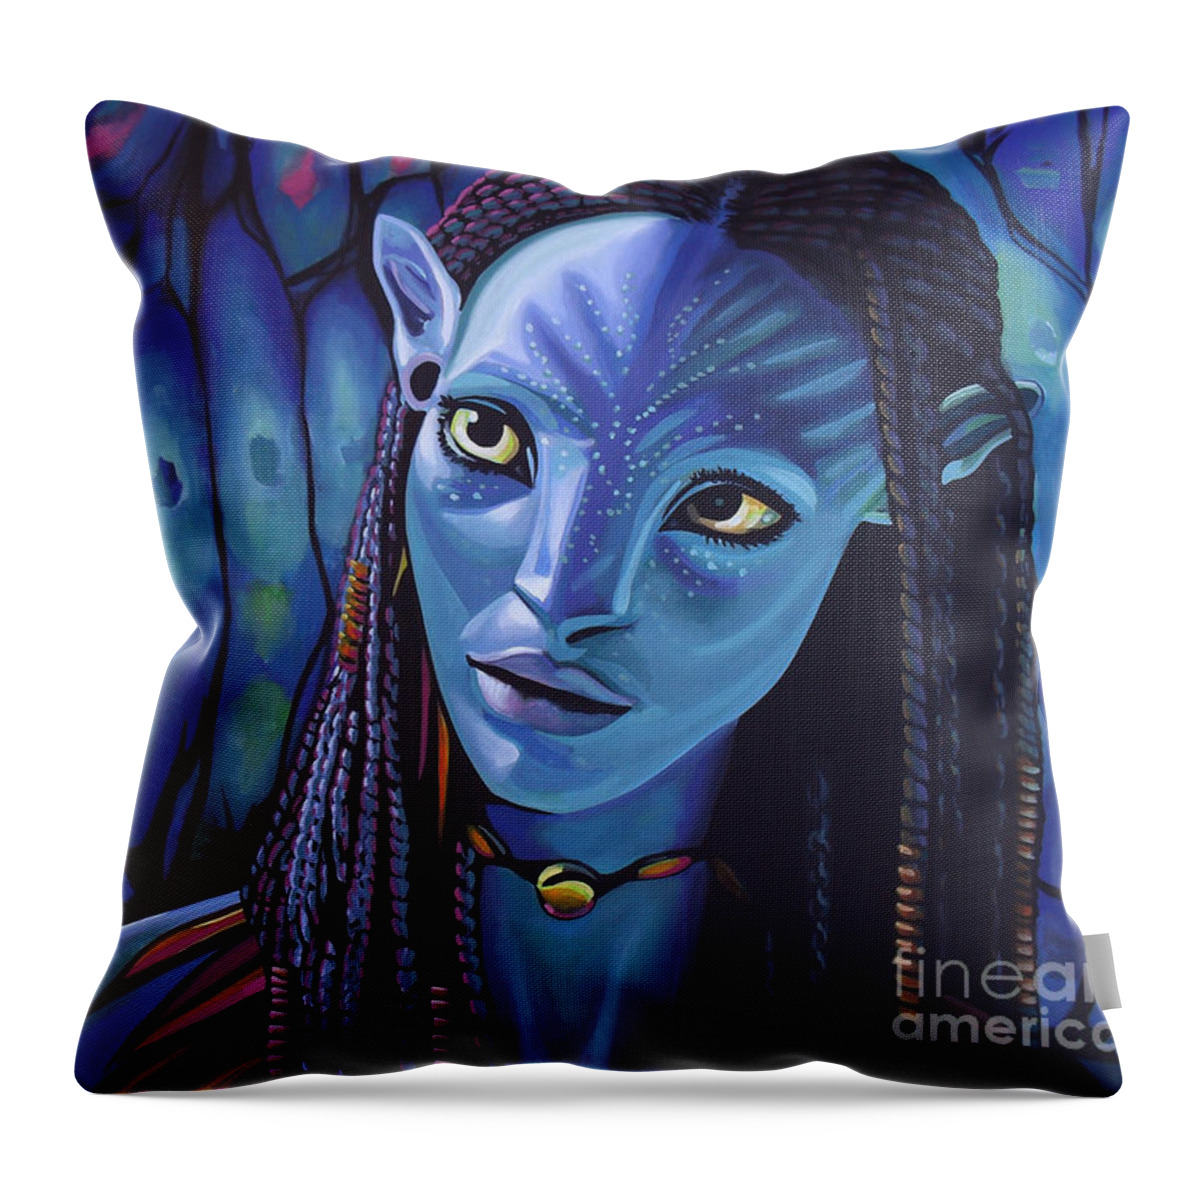 Avatar Throw Pillow featuring the painting Zoe Saldana as Neytiri in Avatar by Paul Meijering